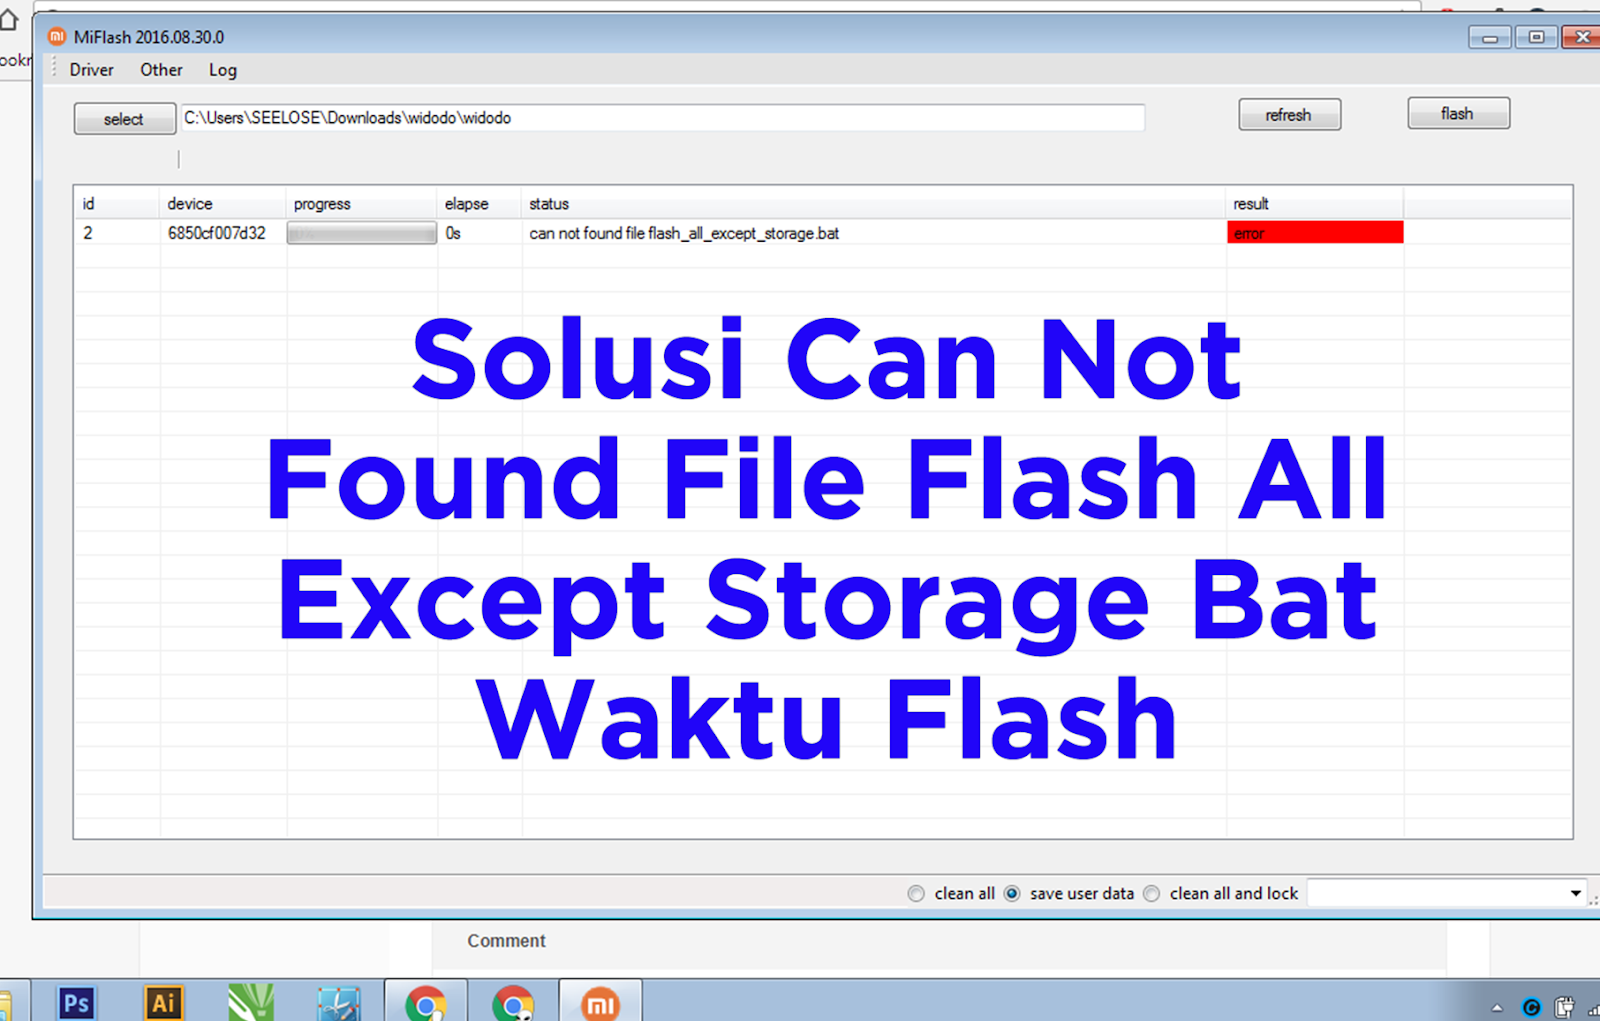 Solusi Can Not Found File Flash All Except Storage Bat Waktu Flash